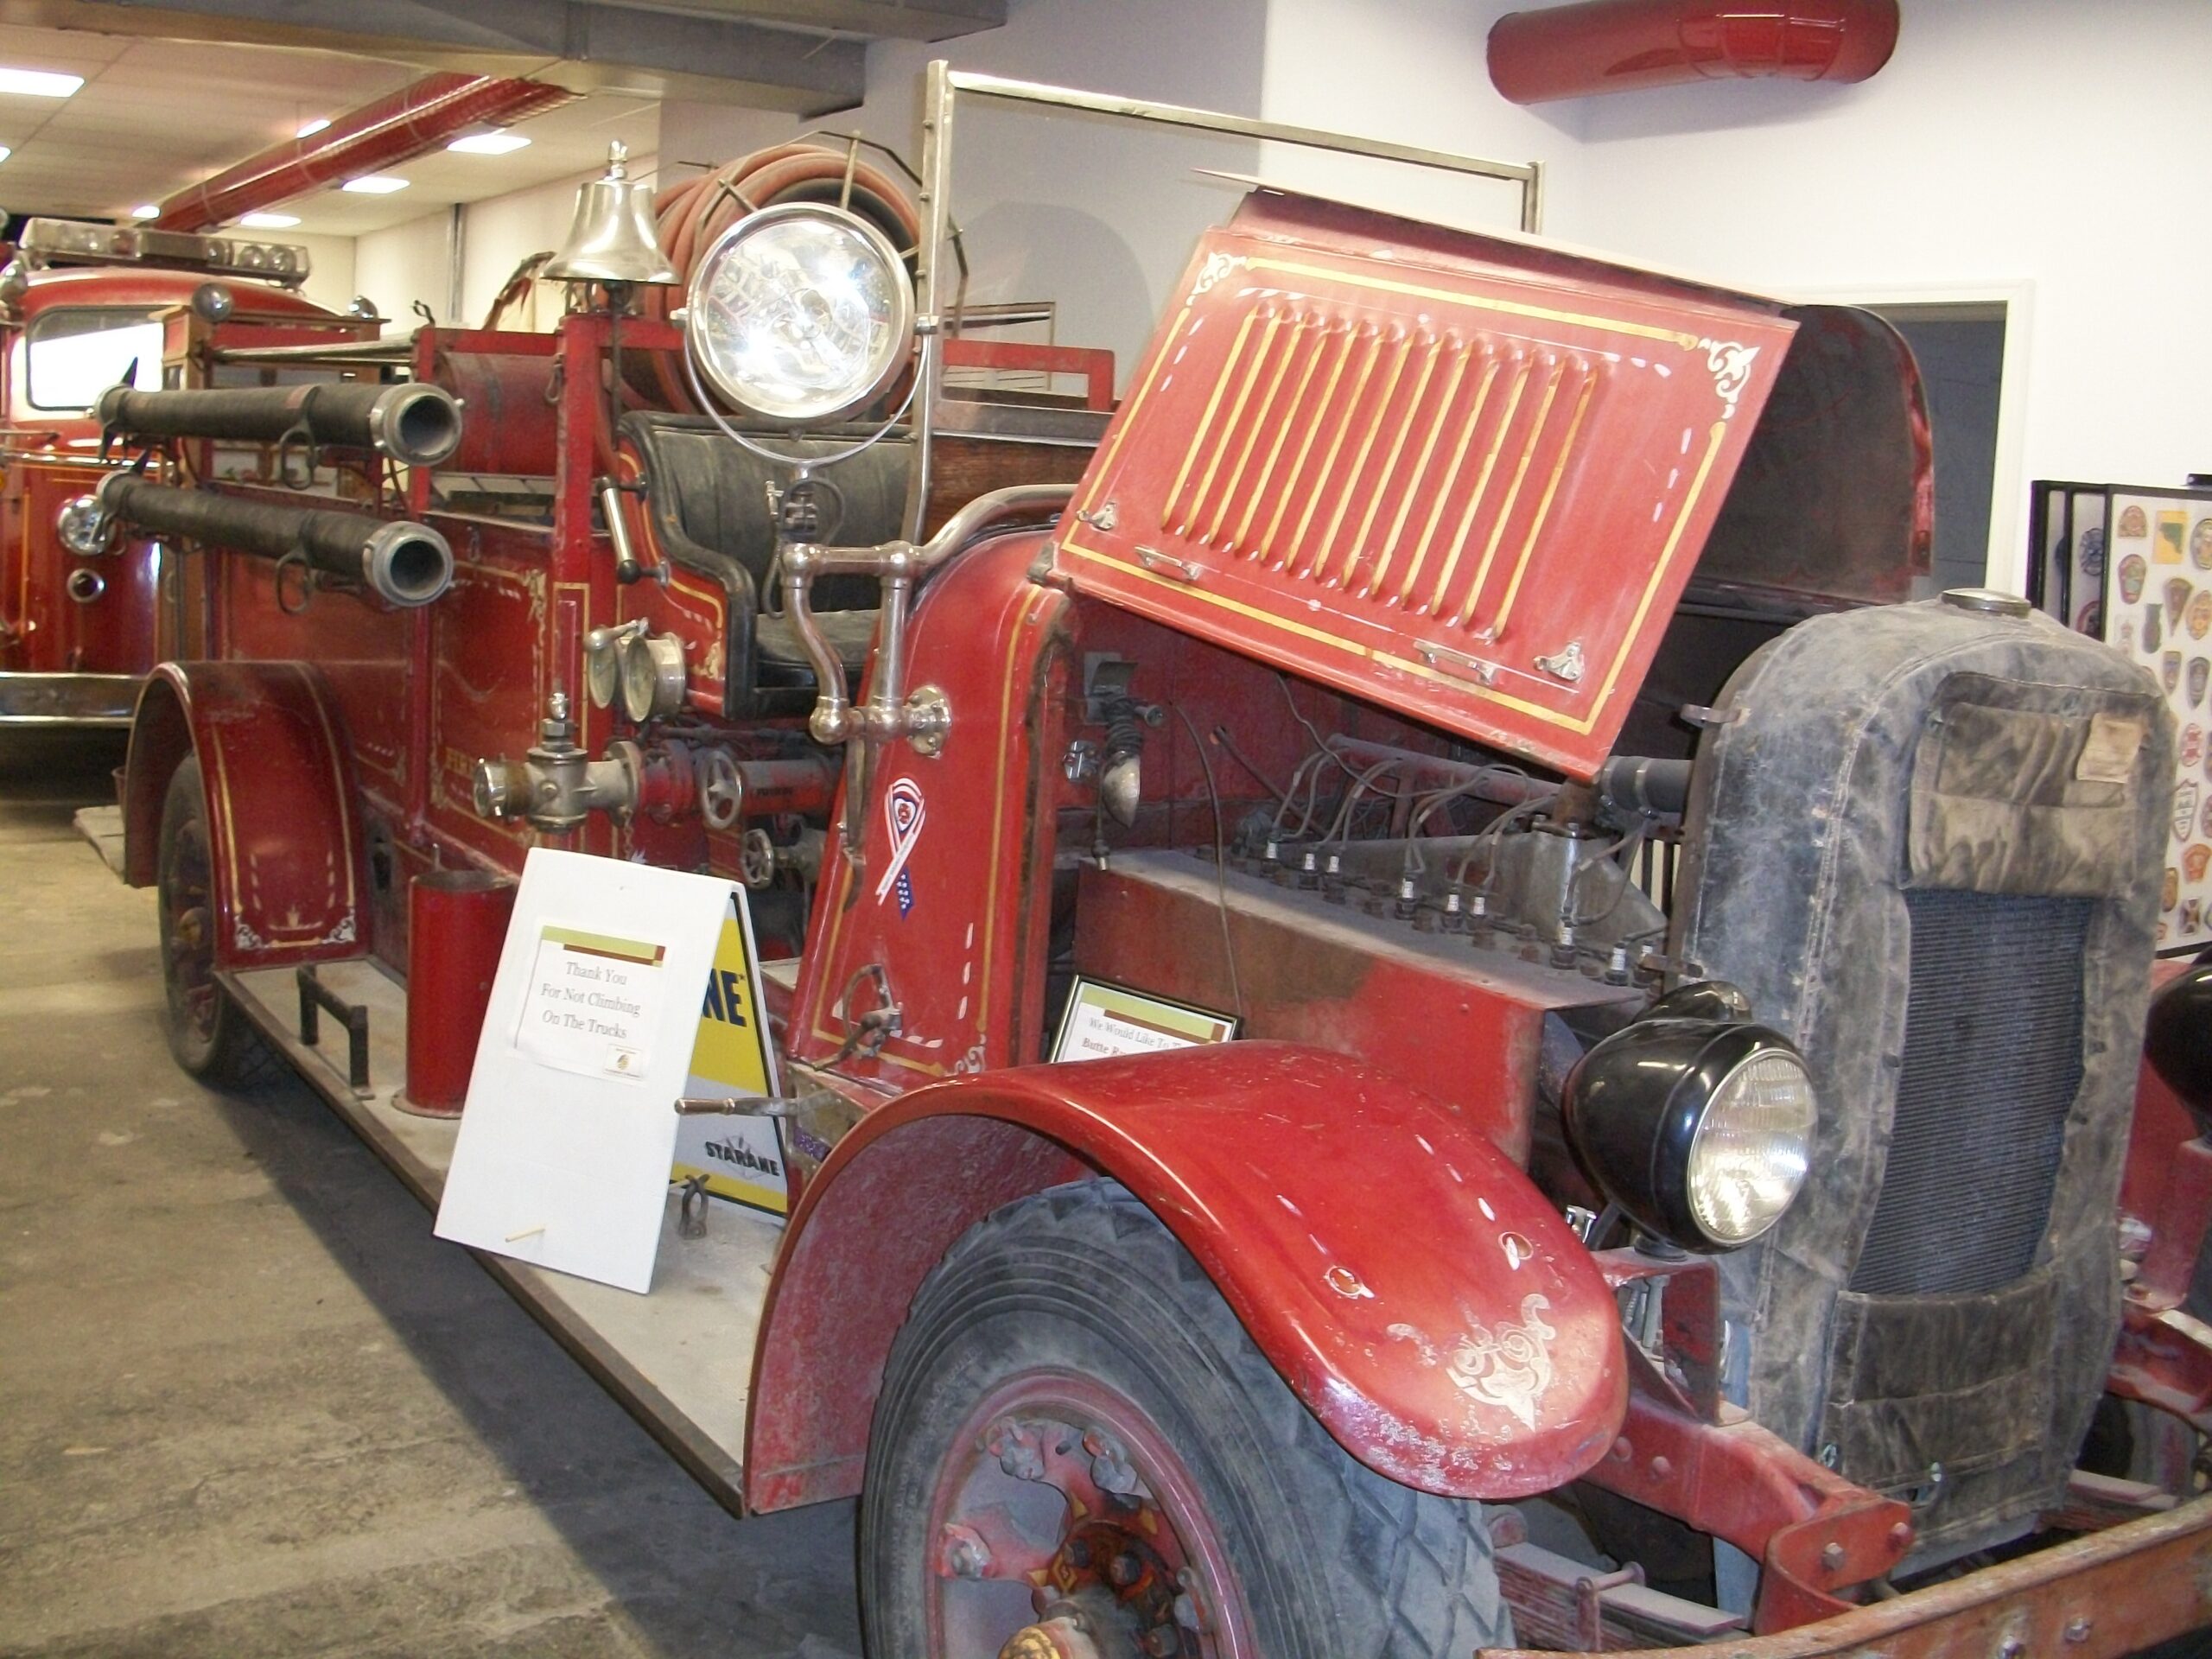 North Dakota Firefighter’s Museum & Fallen Firefighter’s Memorial